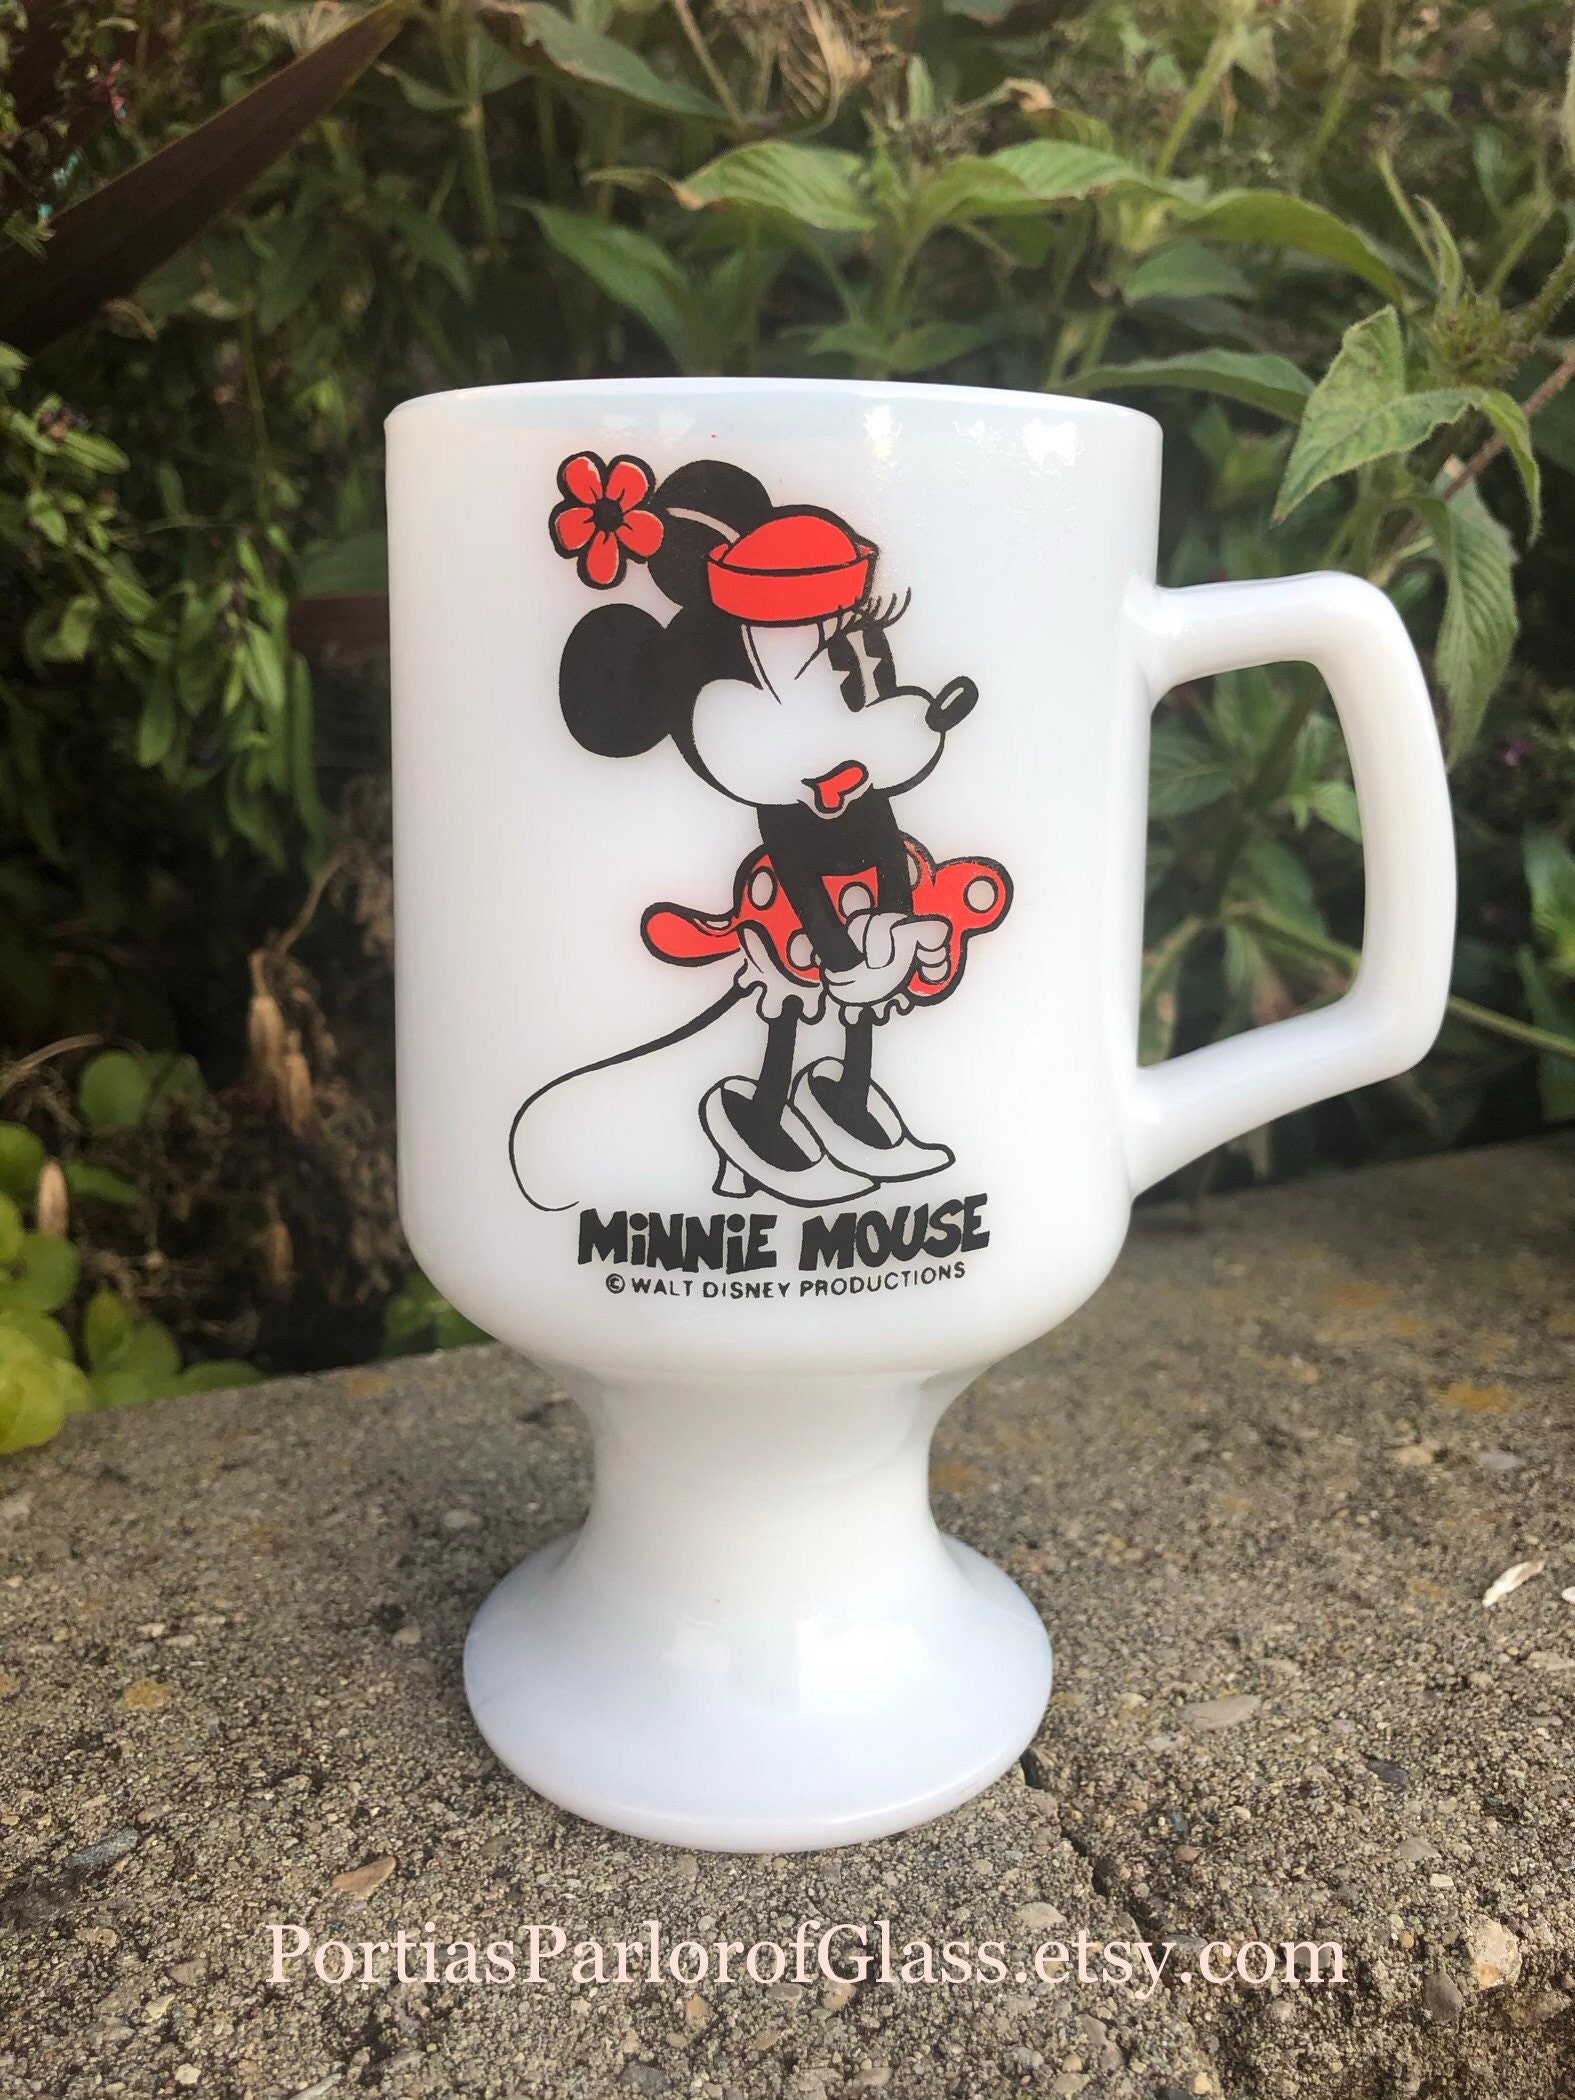 Disney Minnie Mouse Mug Warmer, Includes 12 oz. Minnie Mouse Ceramic Mug,  New, Model DMG-18 